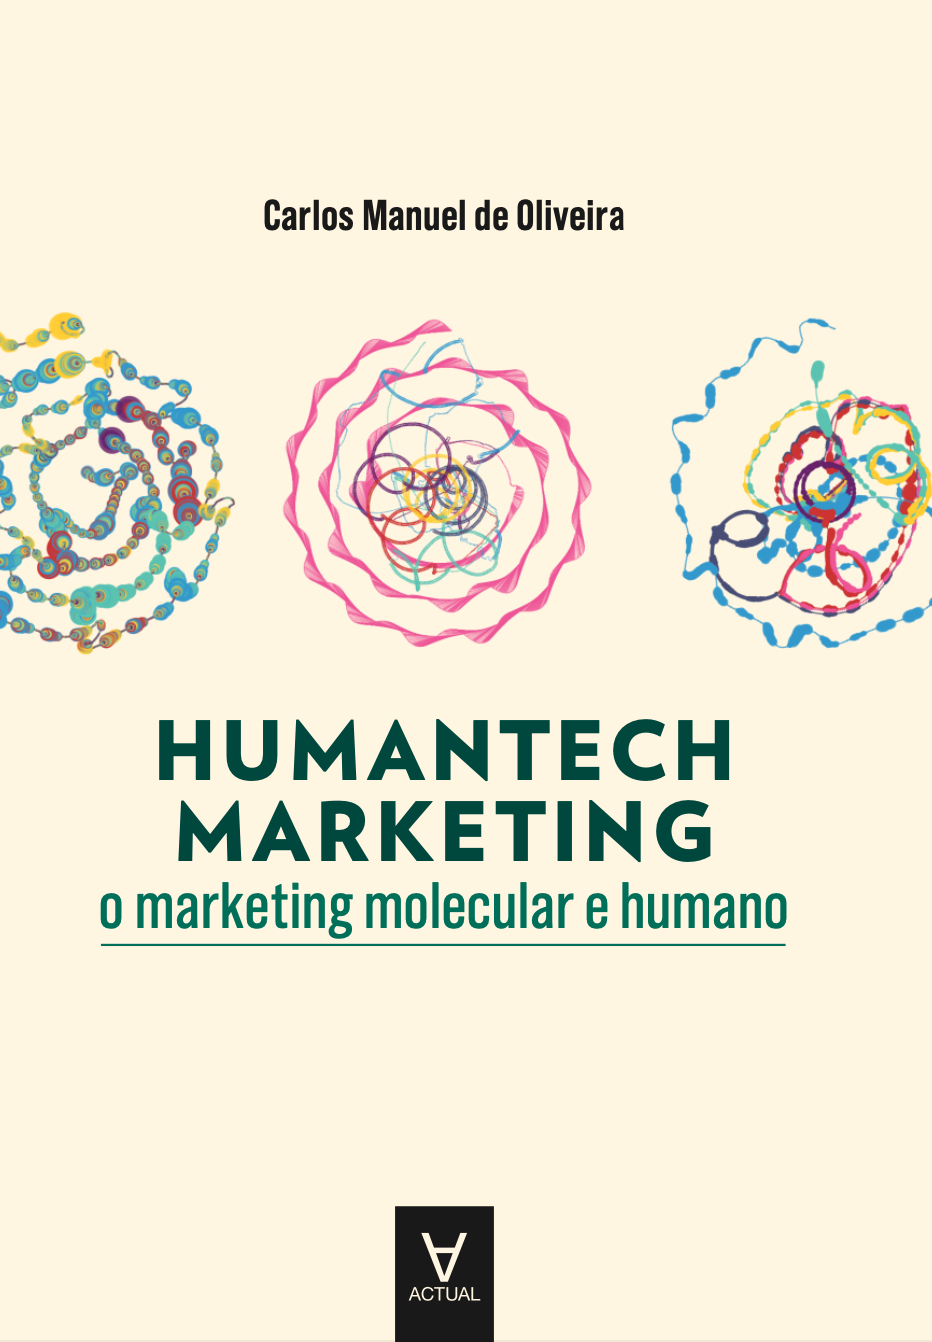 HUMANTECH MARKETING. O marketing molecular e humano